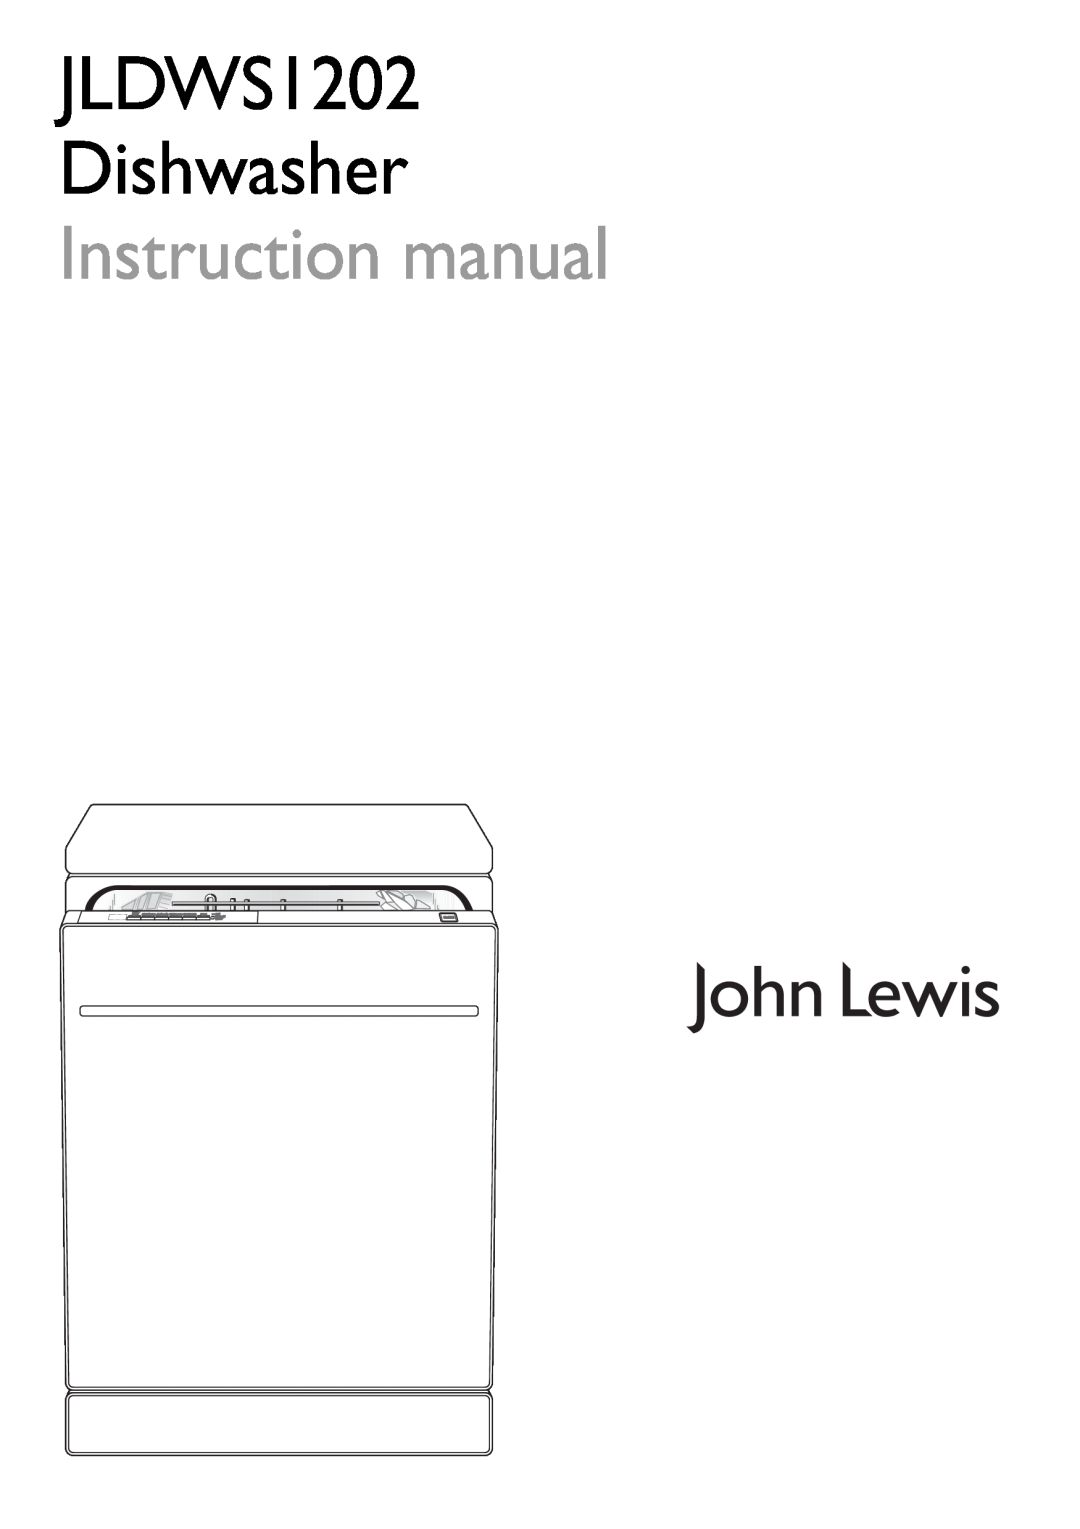 John Lewis JLDWS1202 instruction manual 